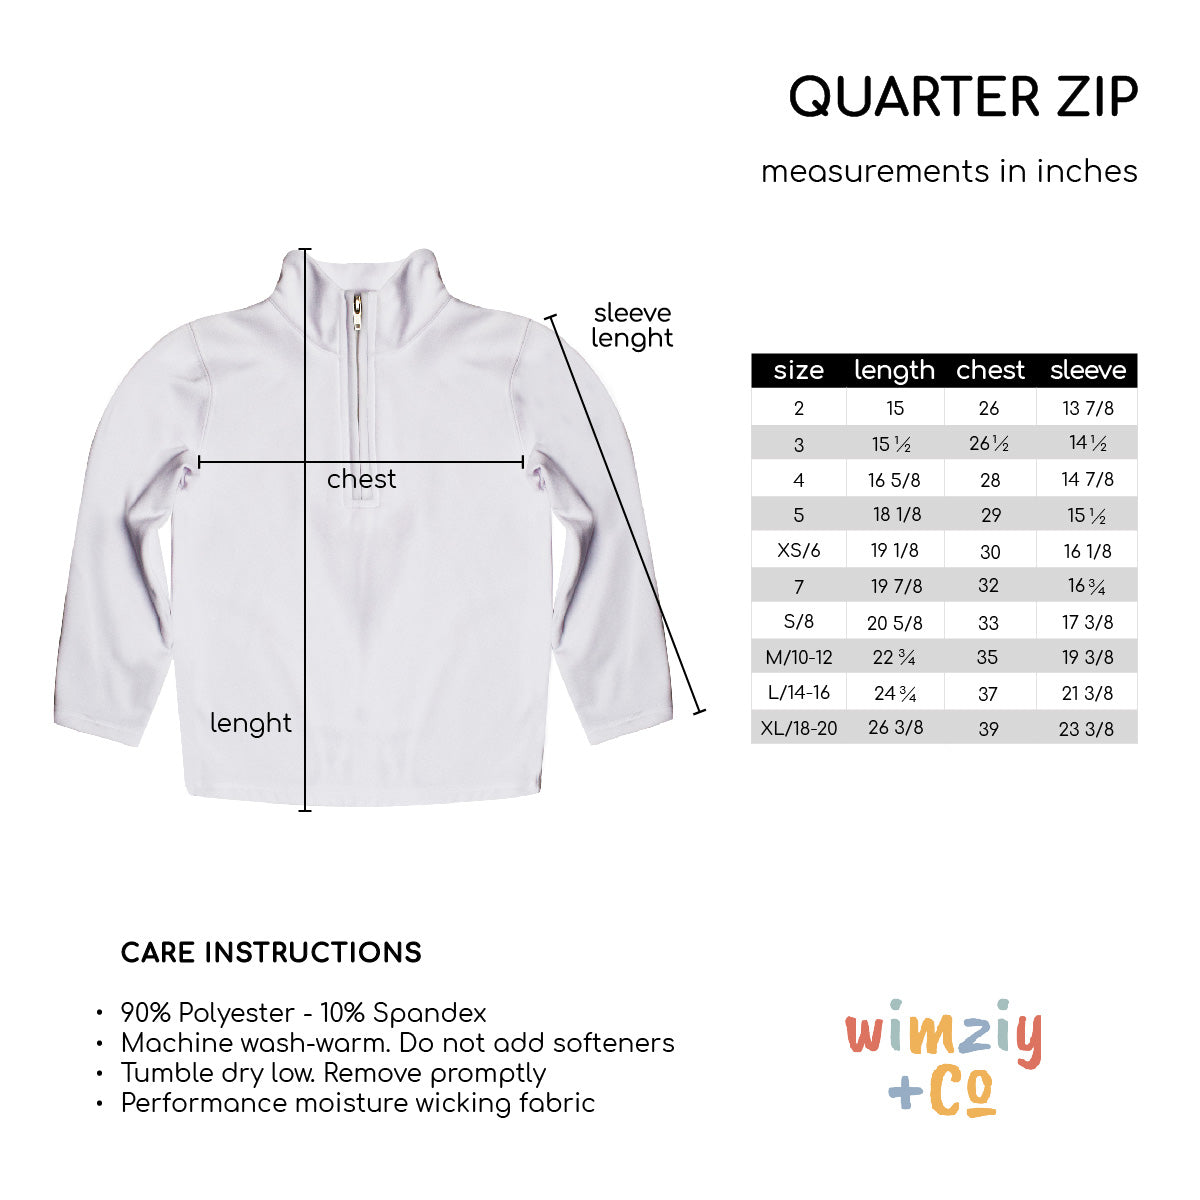 Monogram Long Sleeve Quarter Zip - Wimziy&Co.